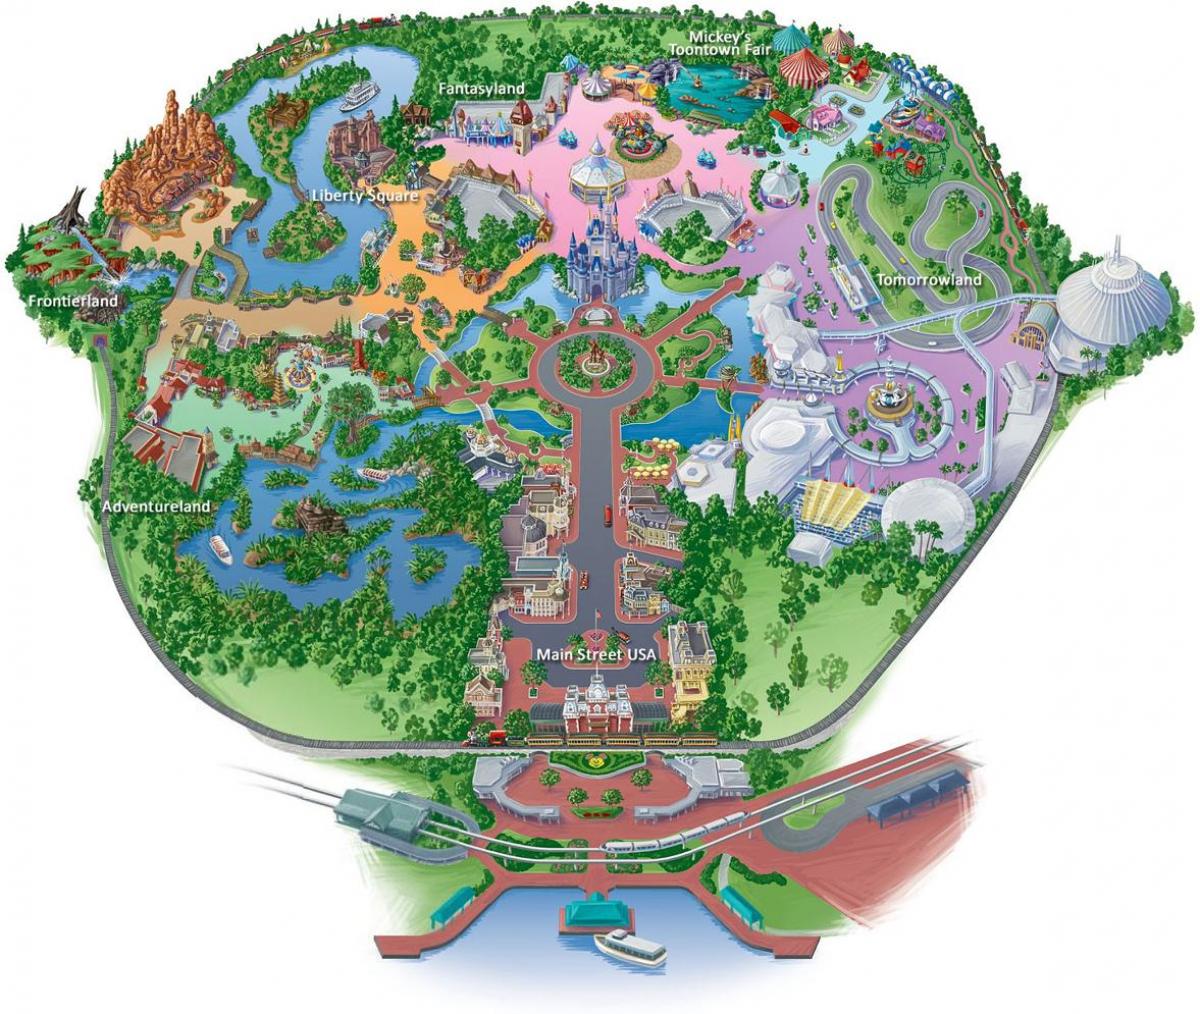 kort over Hong Kong Disneyland